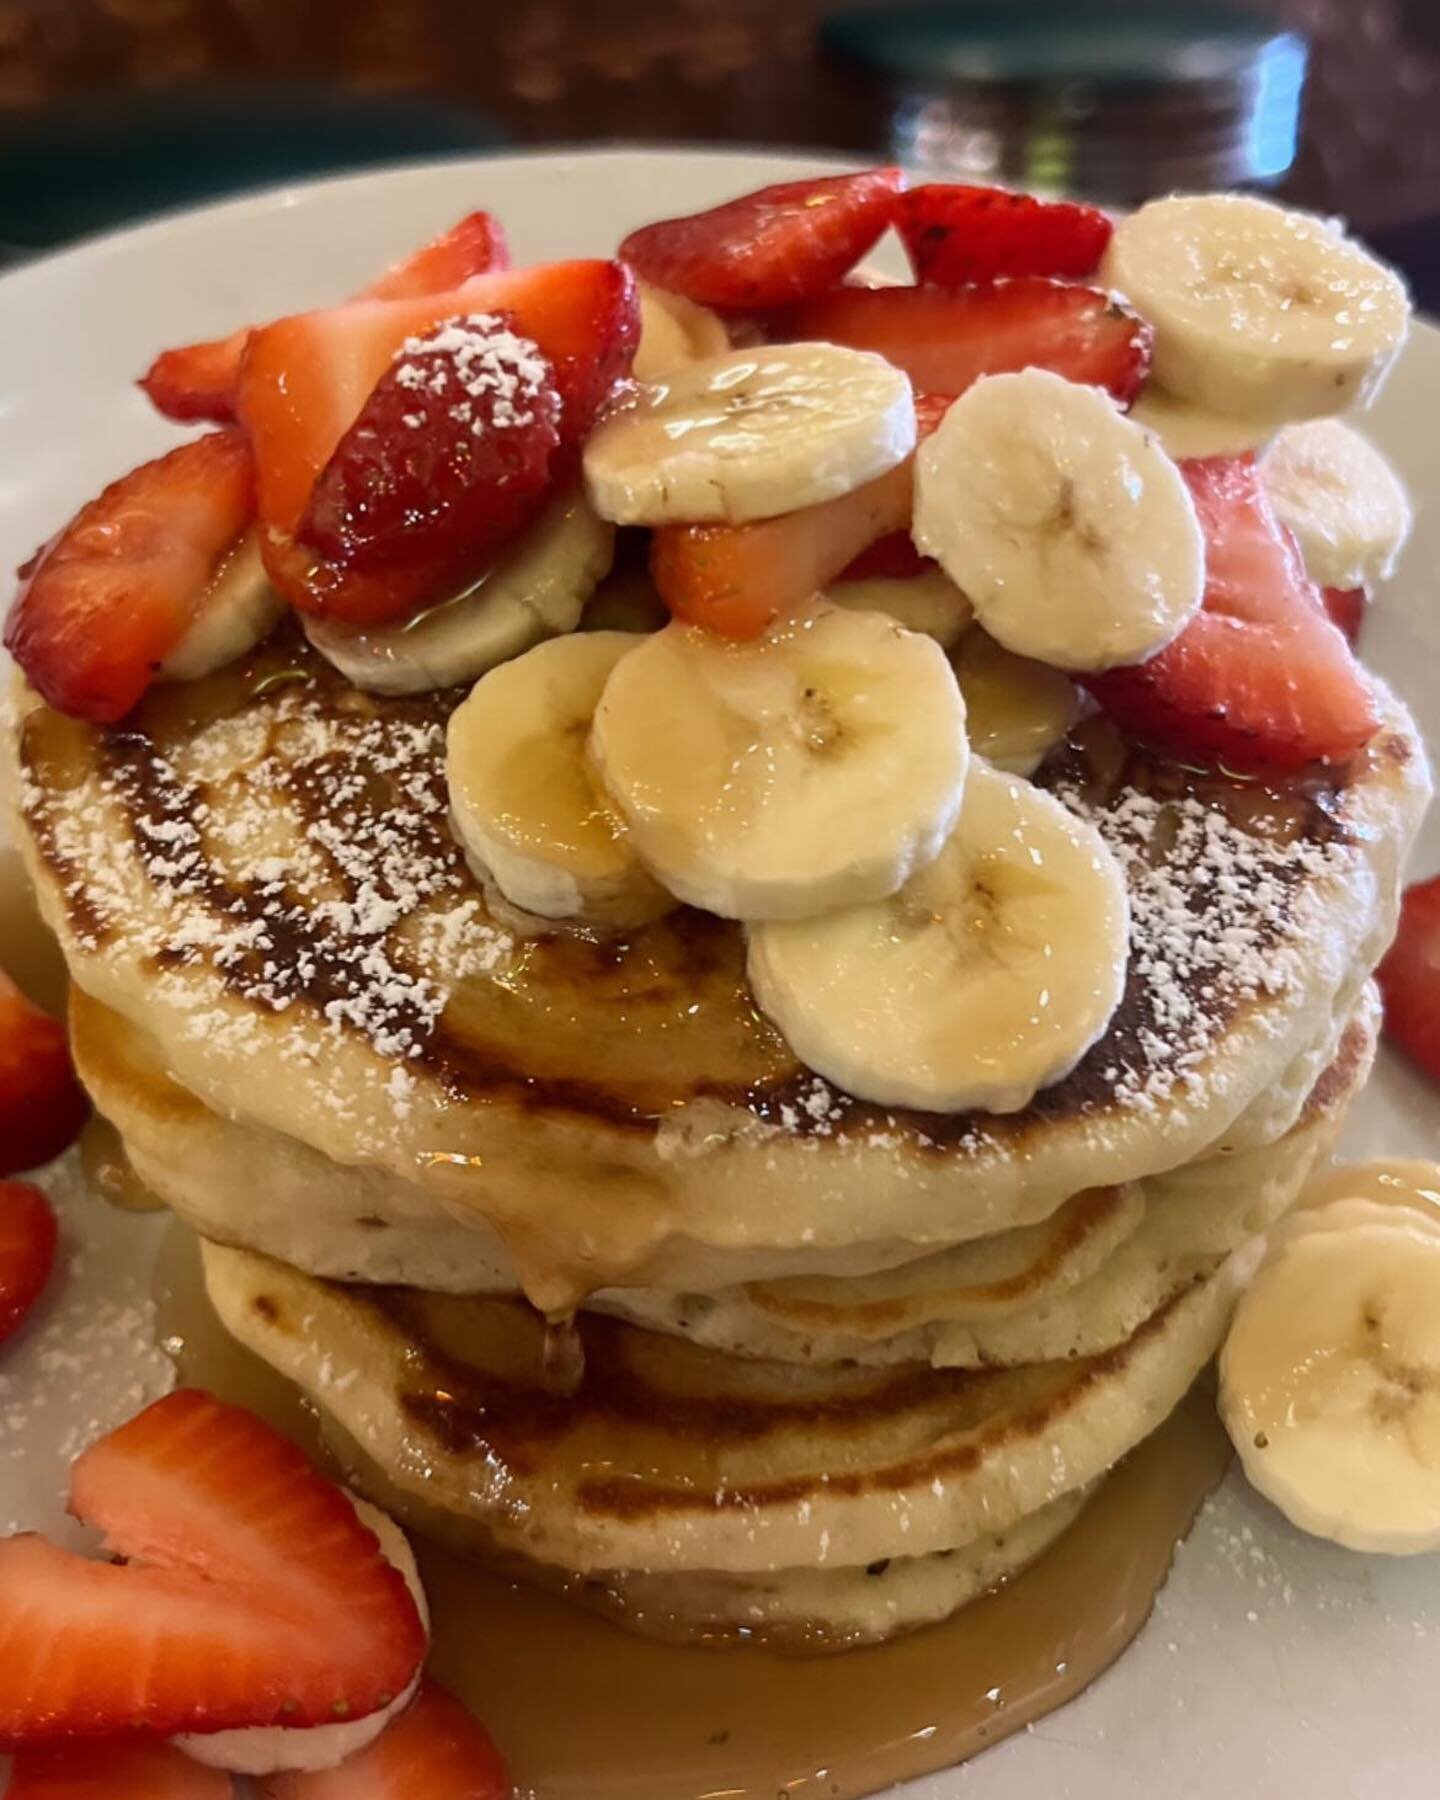 Have your pancakes how you like &lsquo;em &mdash; here with Strawberries and Bananas 🍌 🍓 🥞 :: Happy Sunday Bay Ridge! 
📸: @rikikoudis